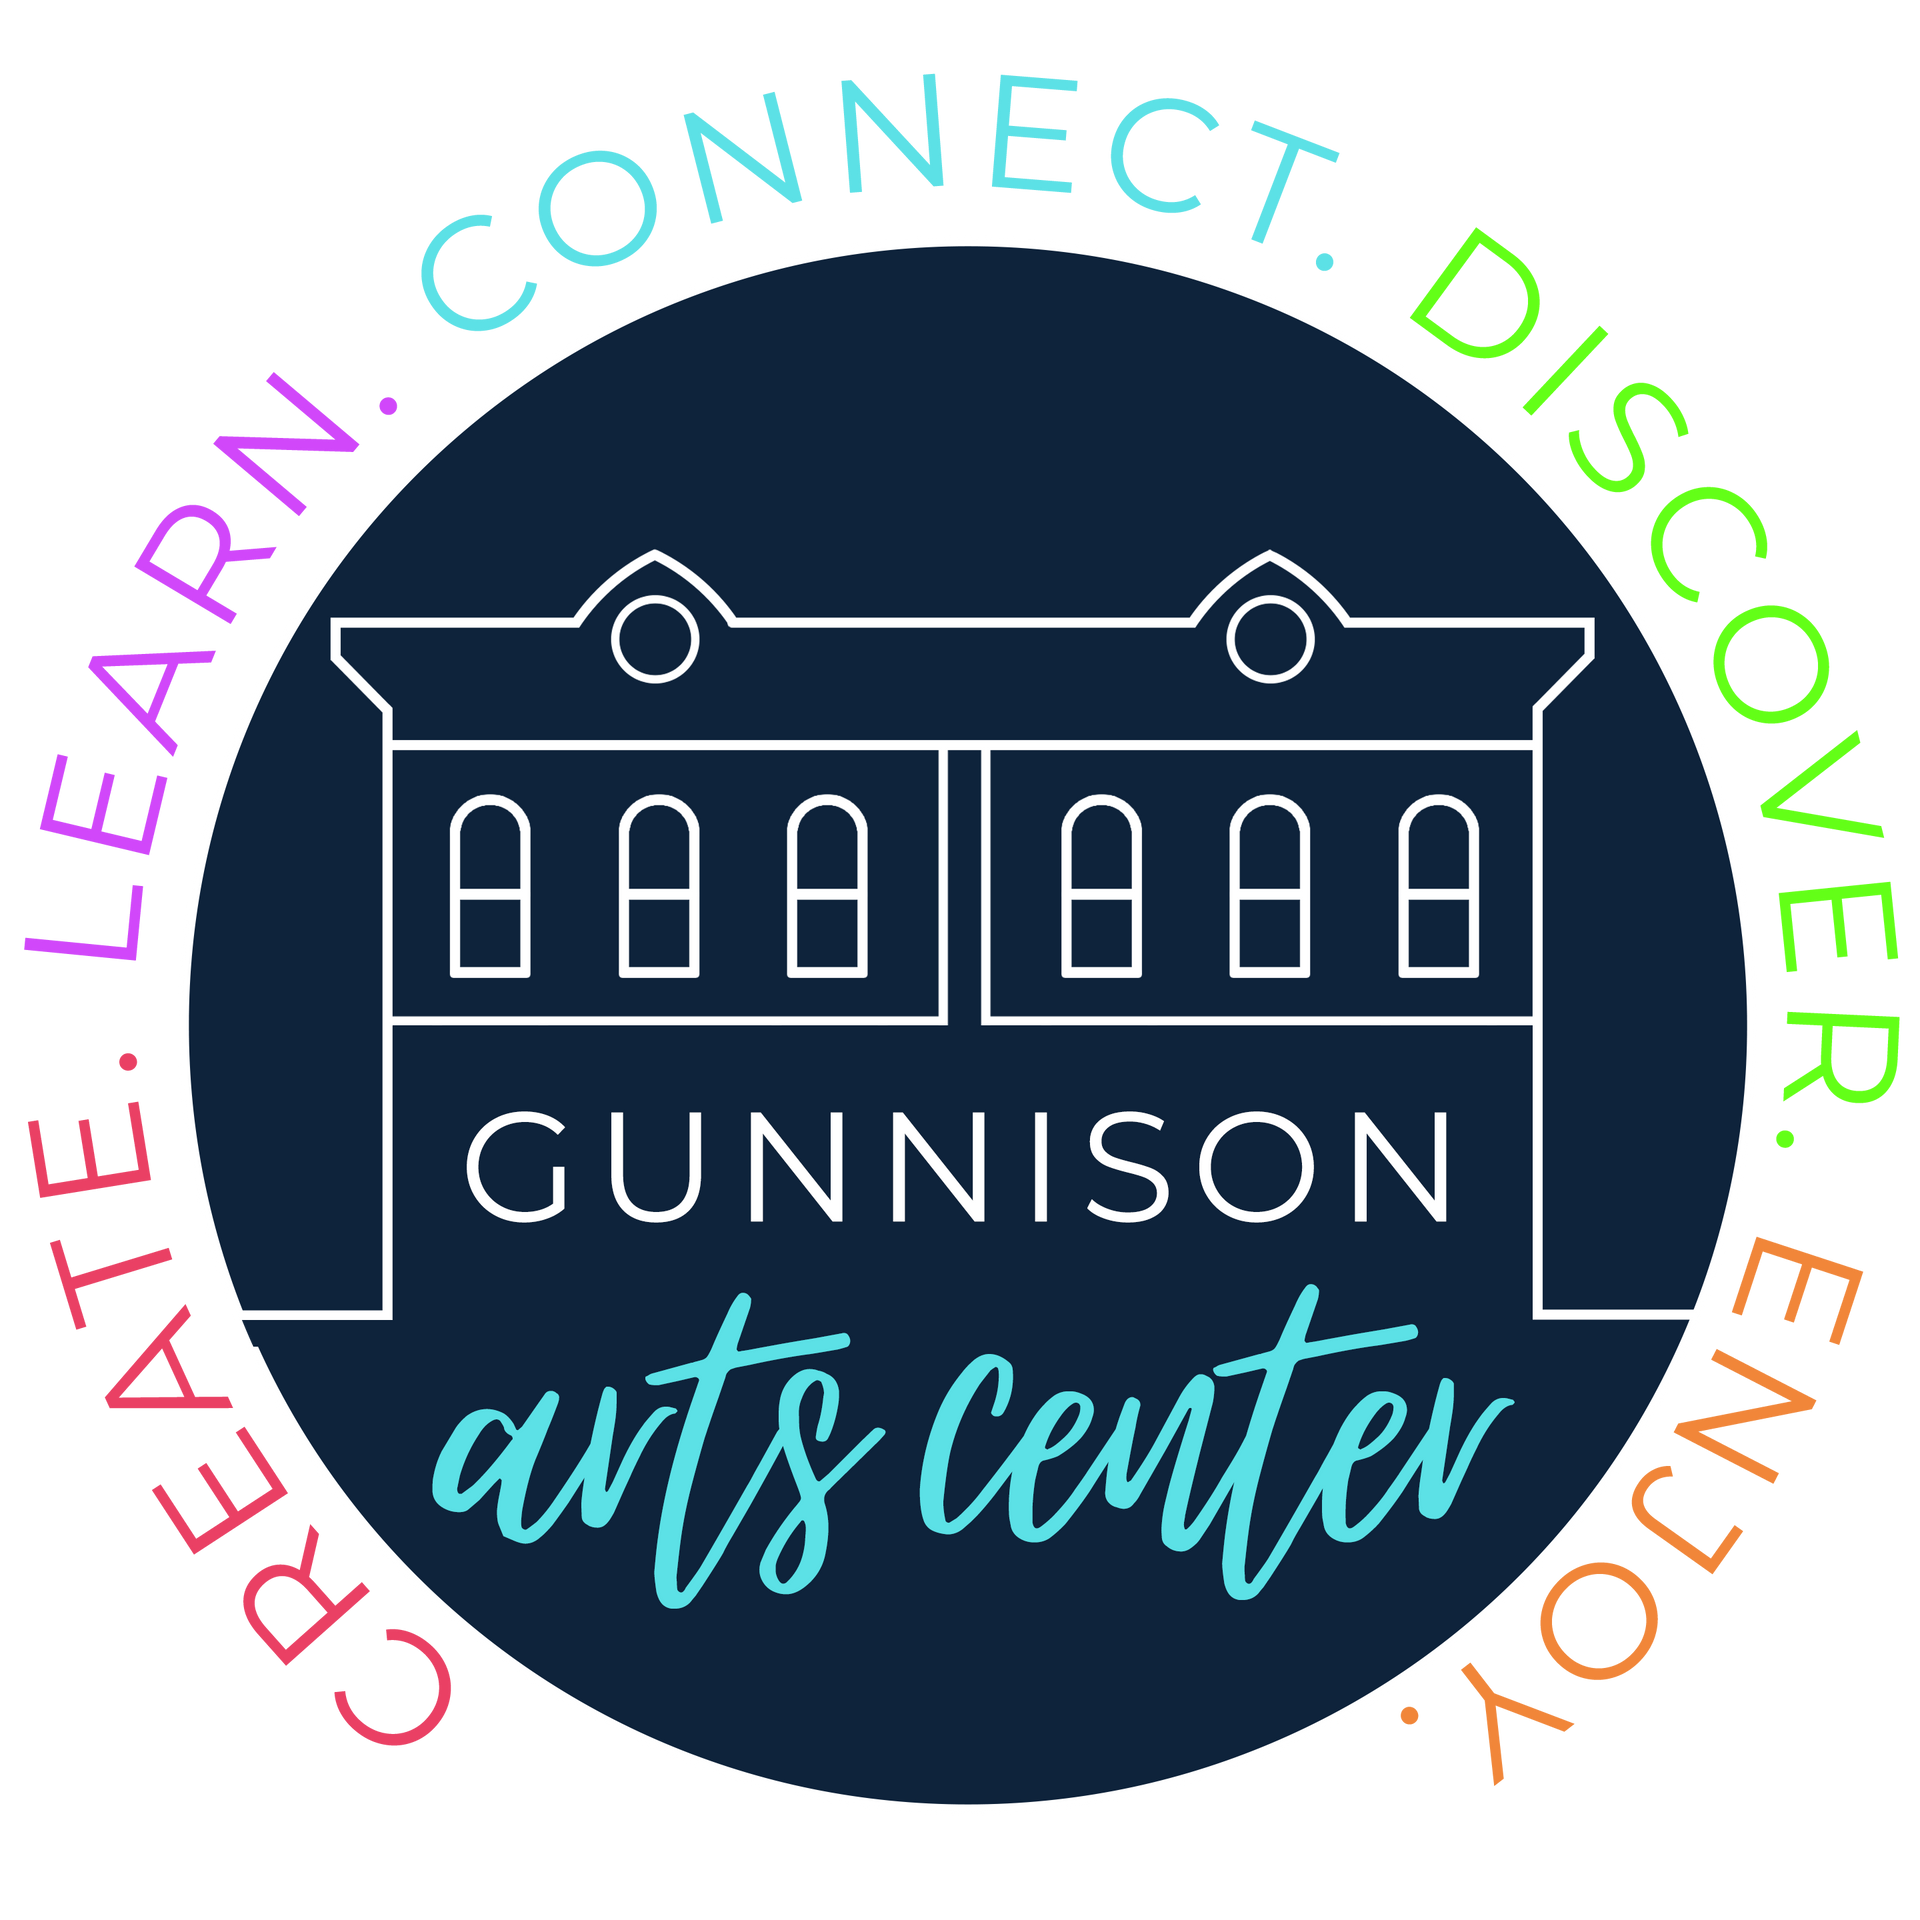 The round logo of Gunnison Art Center, the center of the arts community in Gunnison, Colorado.